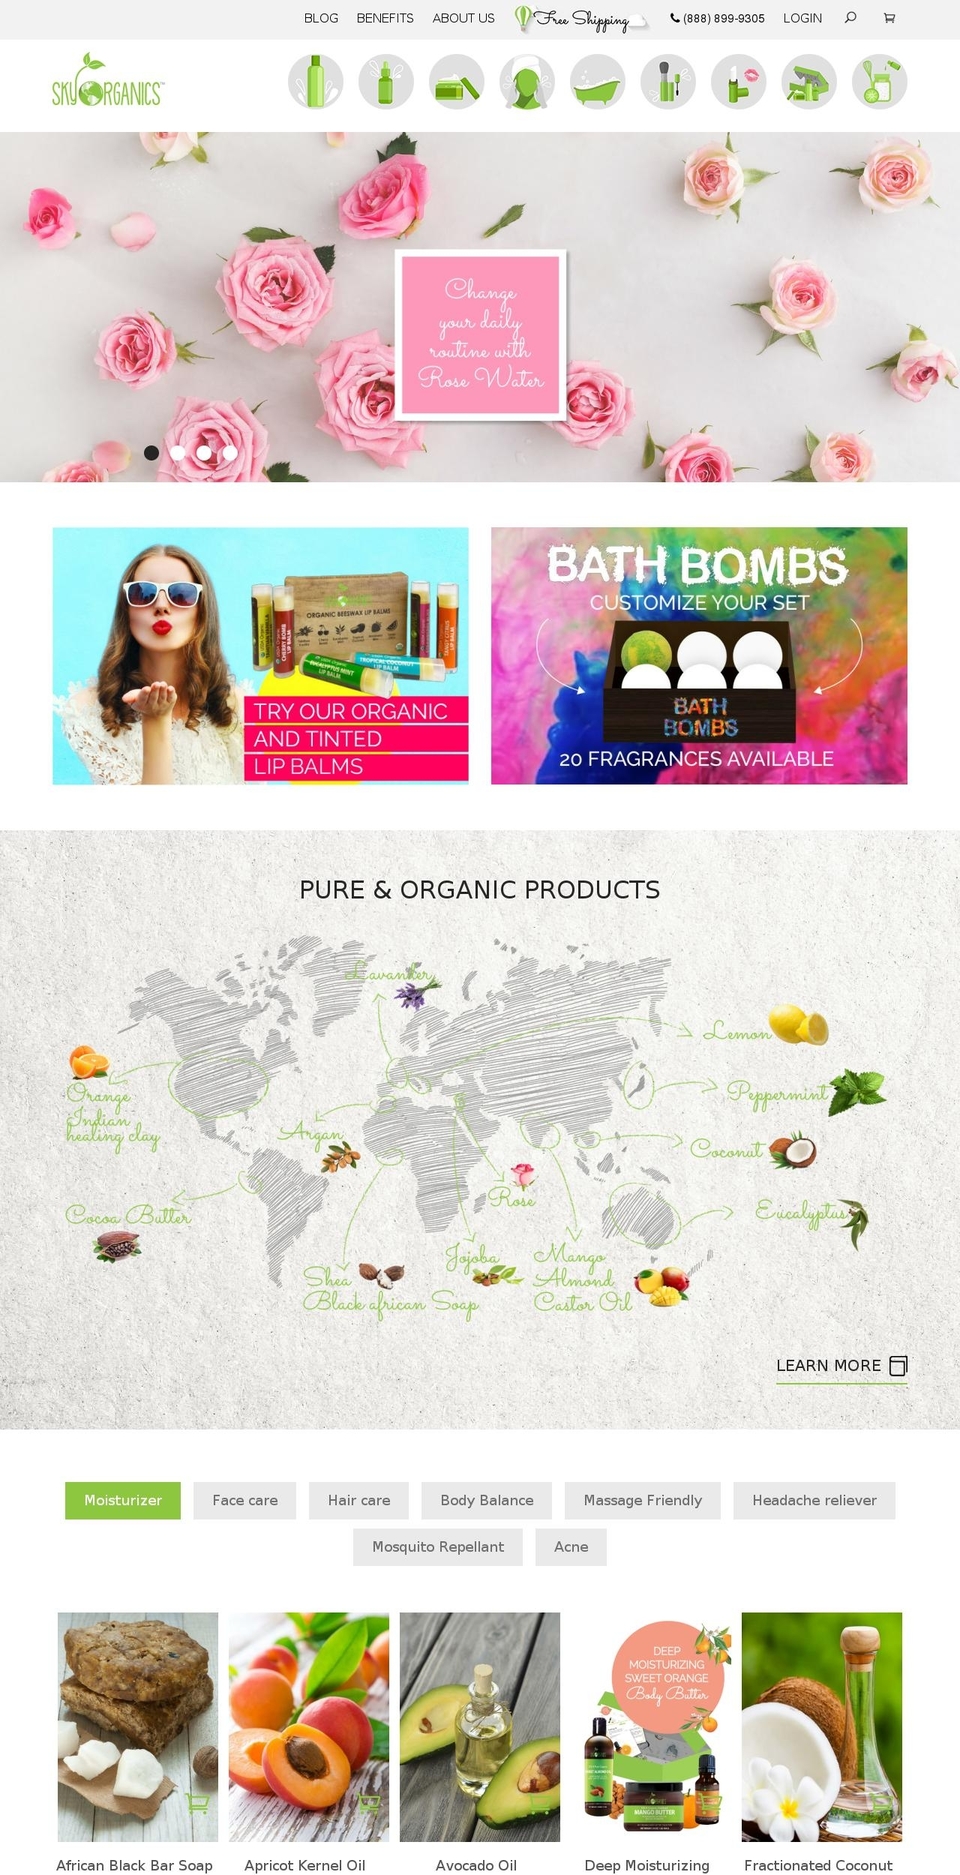 skyorganics.us shopify website screenshot